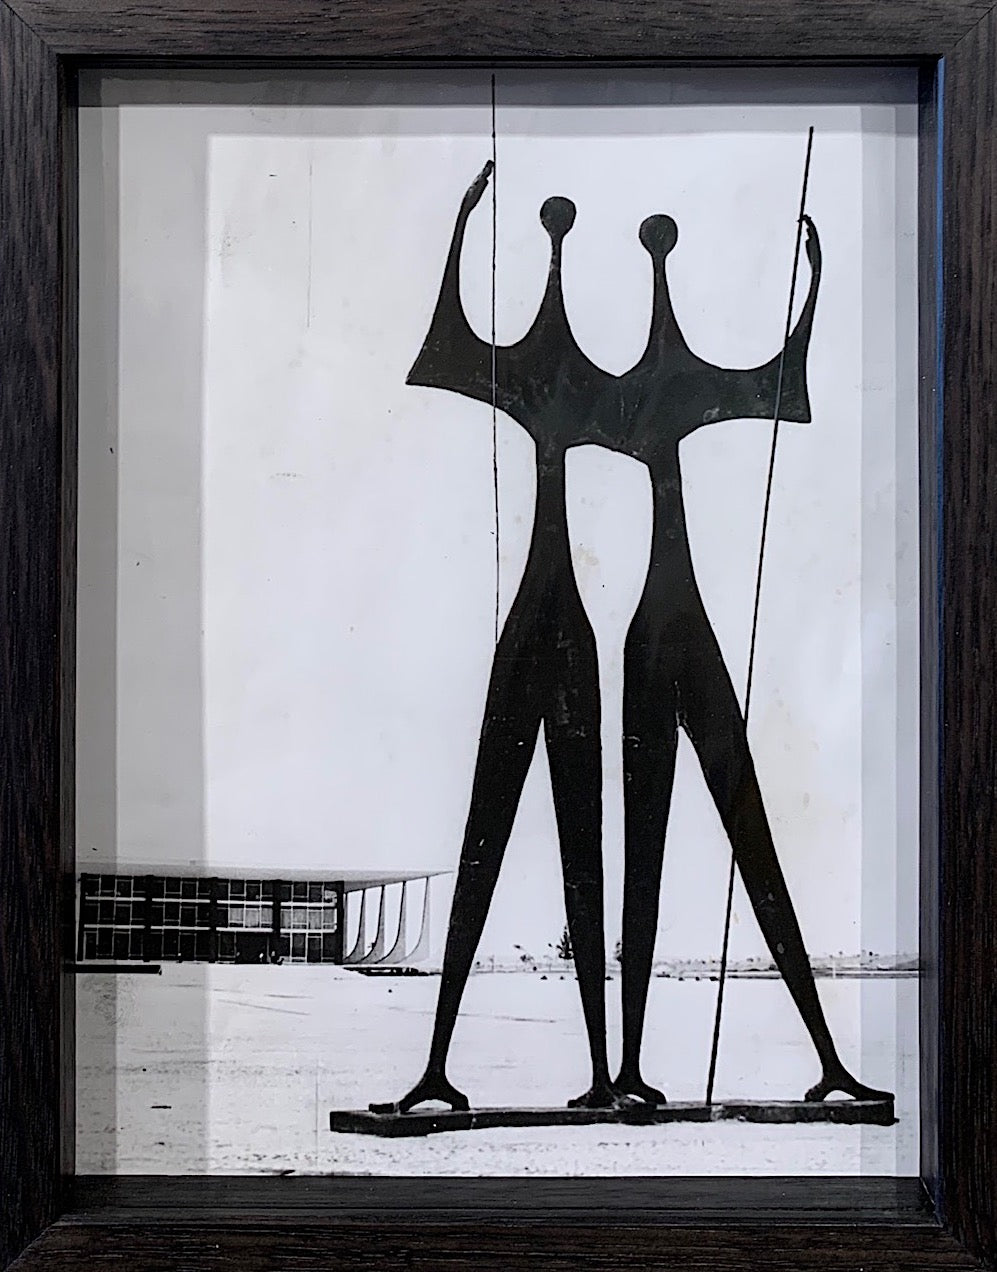 'Os Candangos bronze sculpture,  Brasilia by Bruno Giorgi' - original vintage press photograph